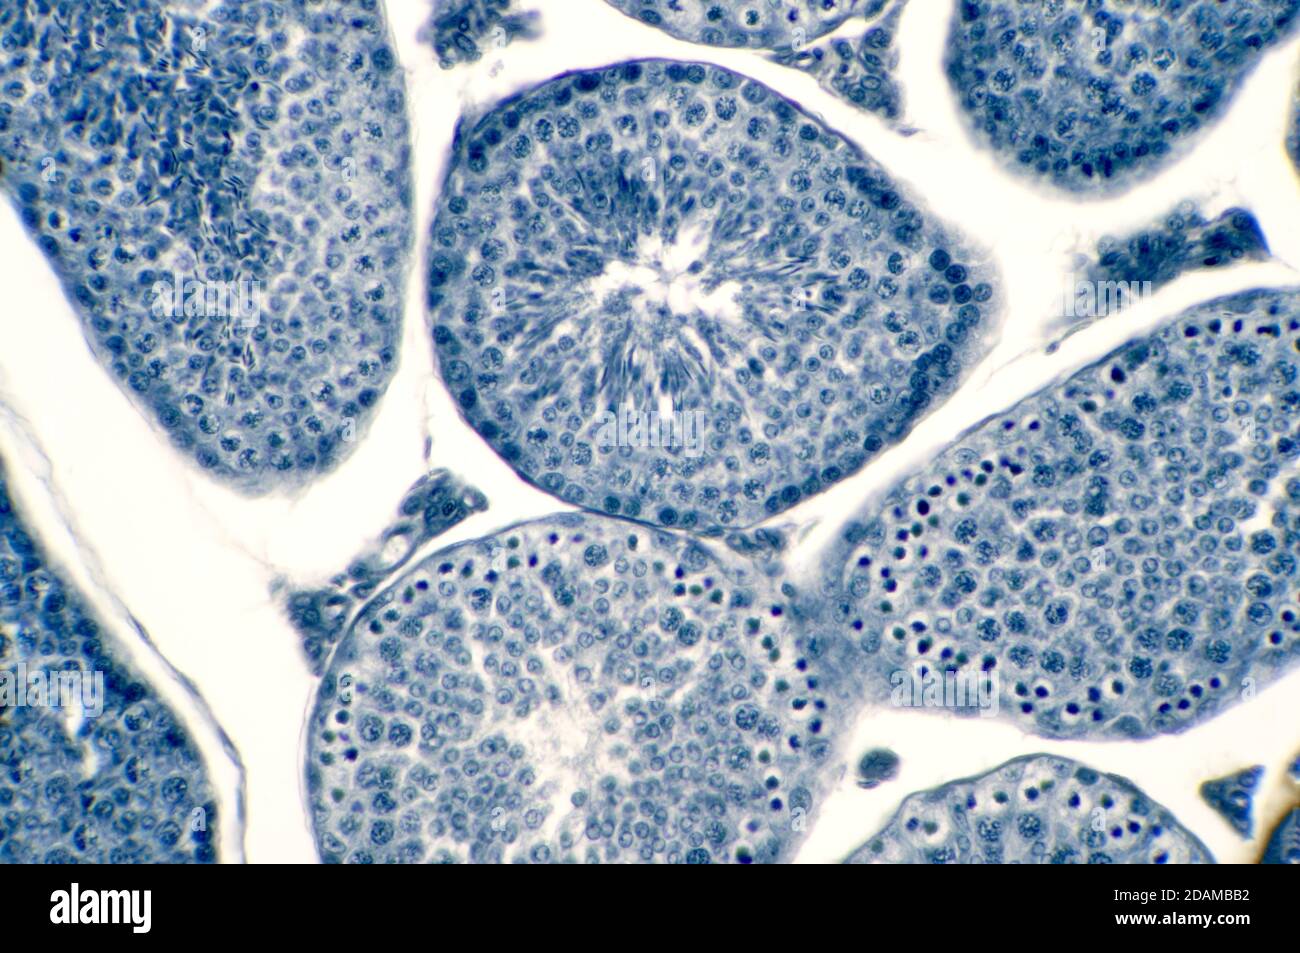 Human testis, light micrograph. Seen here are spermatogonia, spermatocytes undergoing meiosis, spermatids, and spermatozoa. Stock Photo